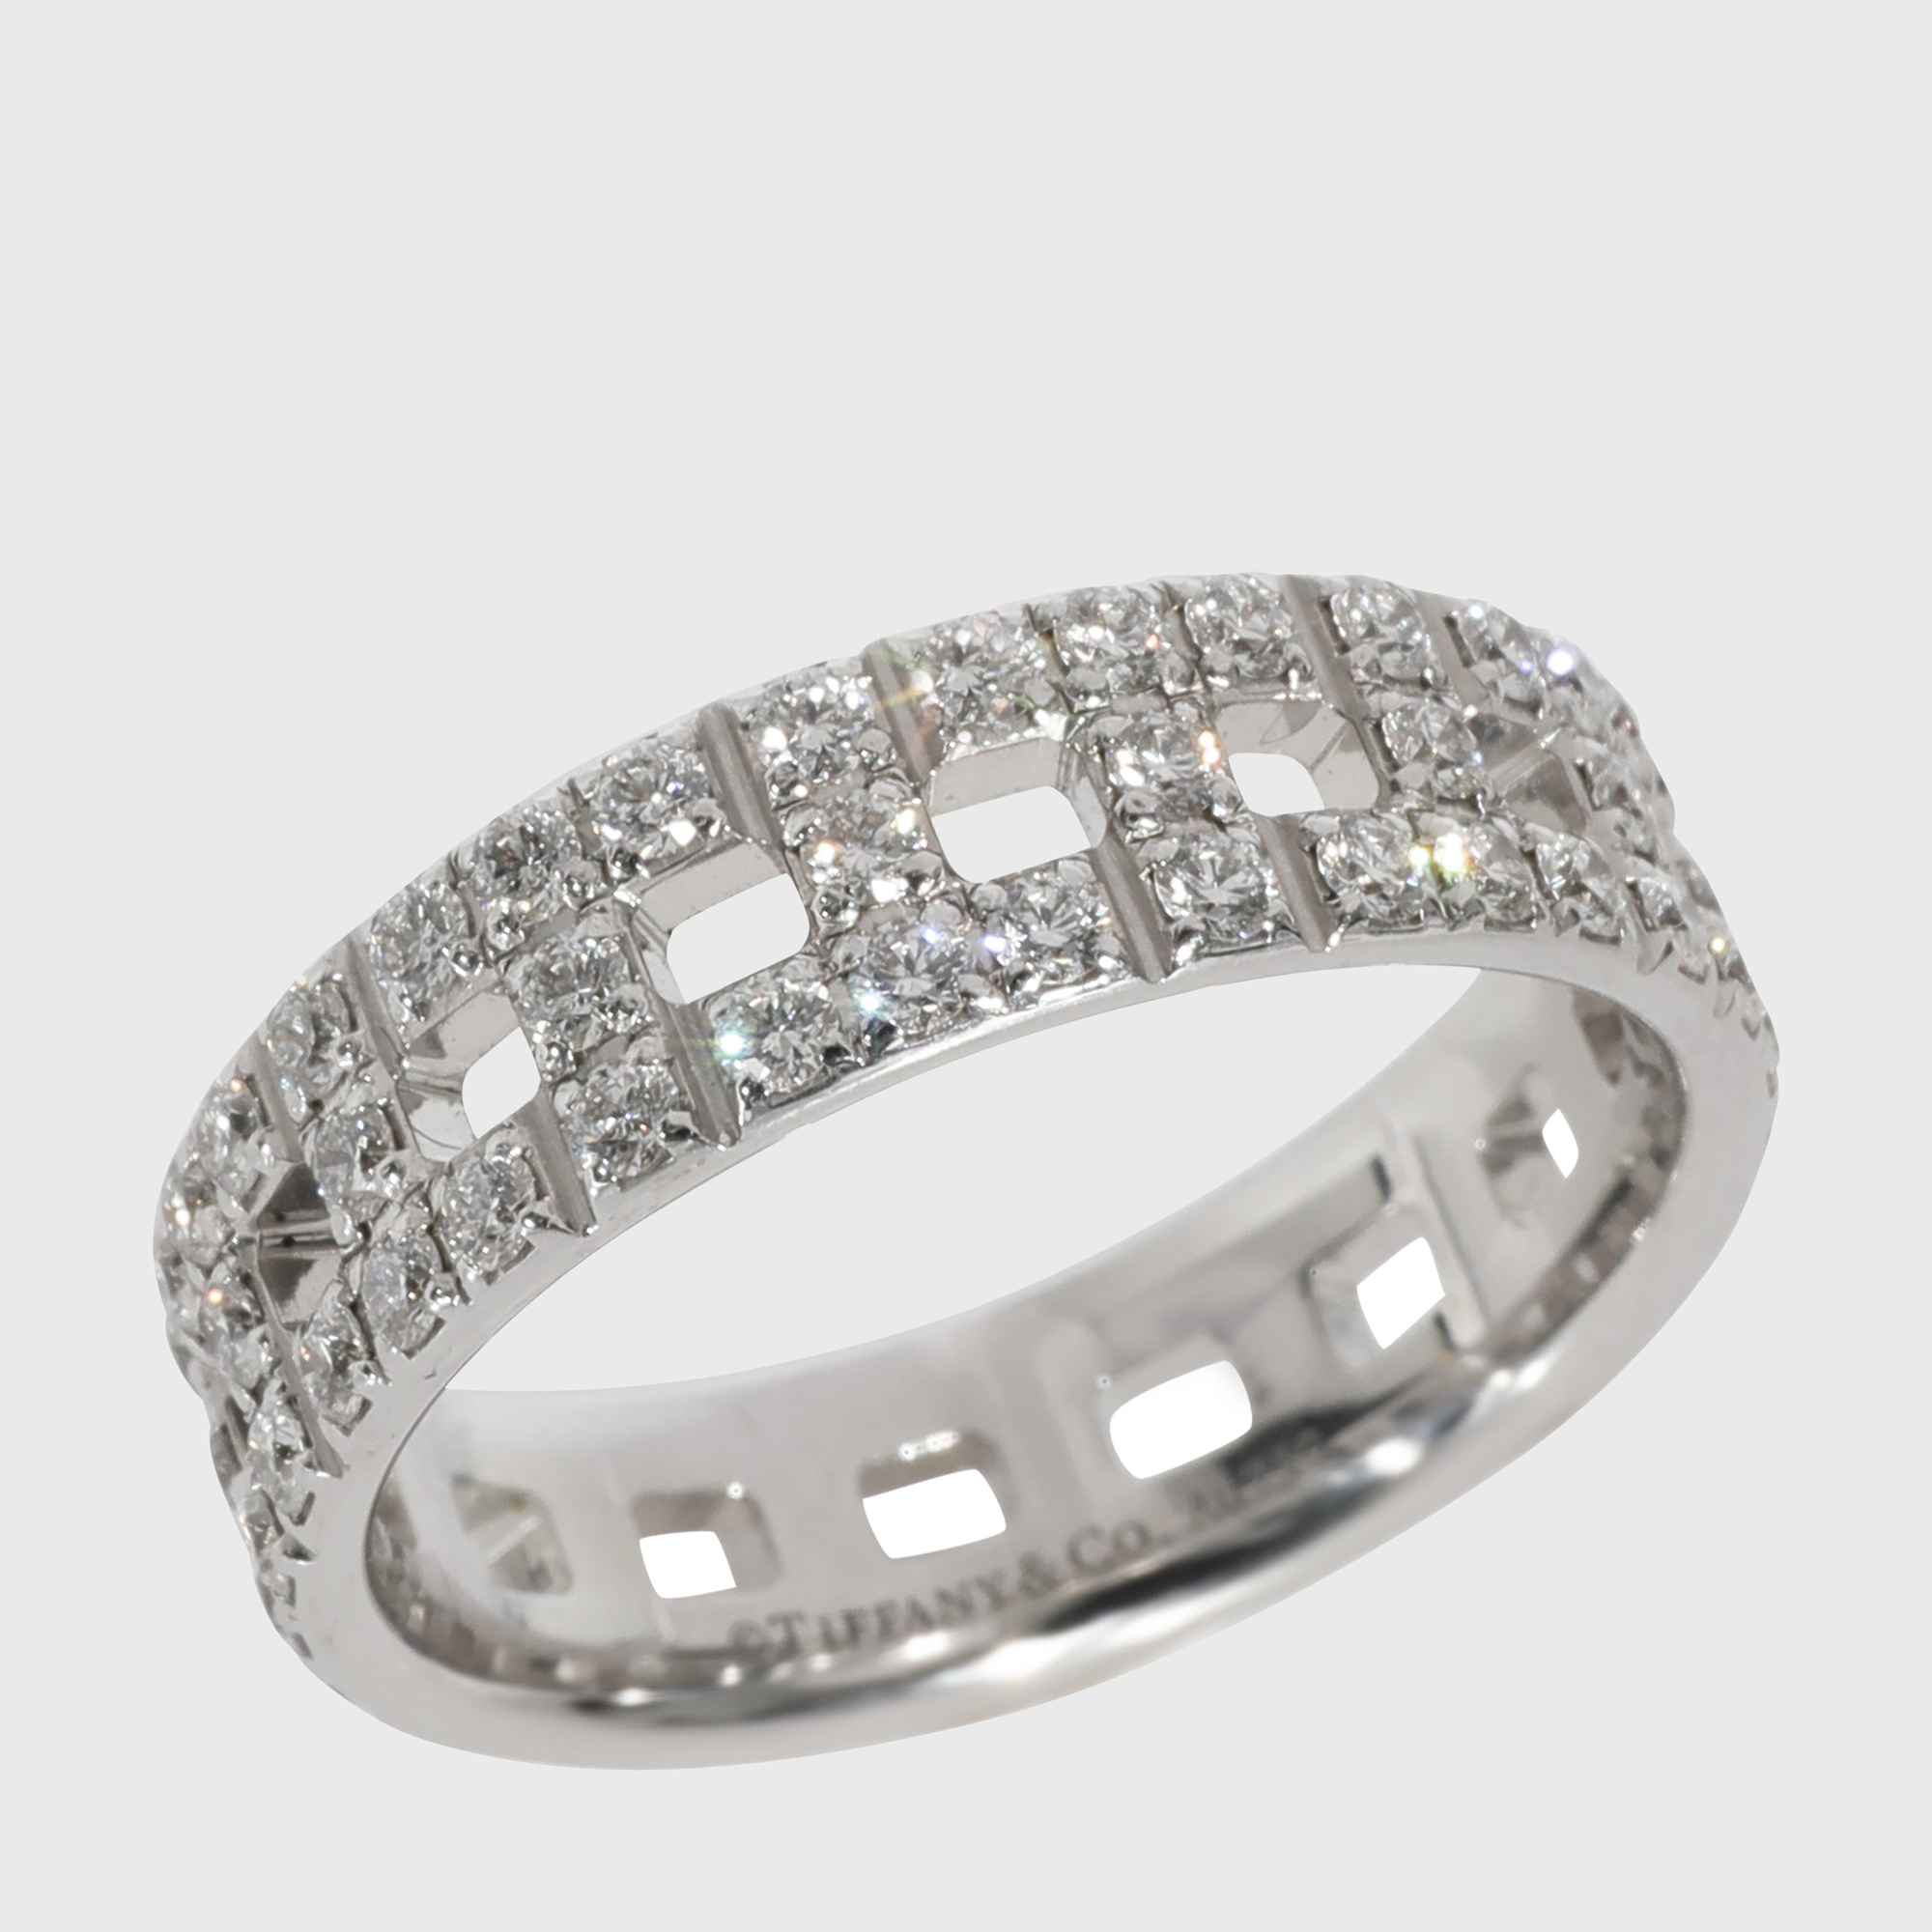 Tiffany & co. tiffany true diamond ring in 18k white gold 0.99 ctw ring size 54